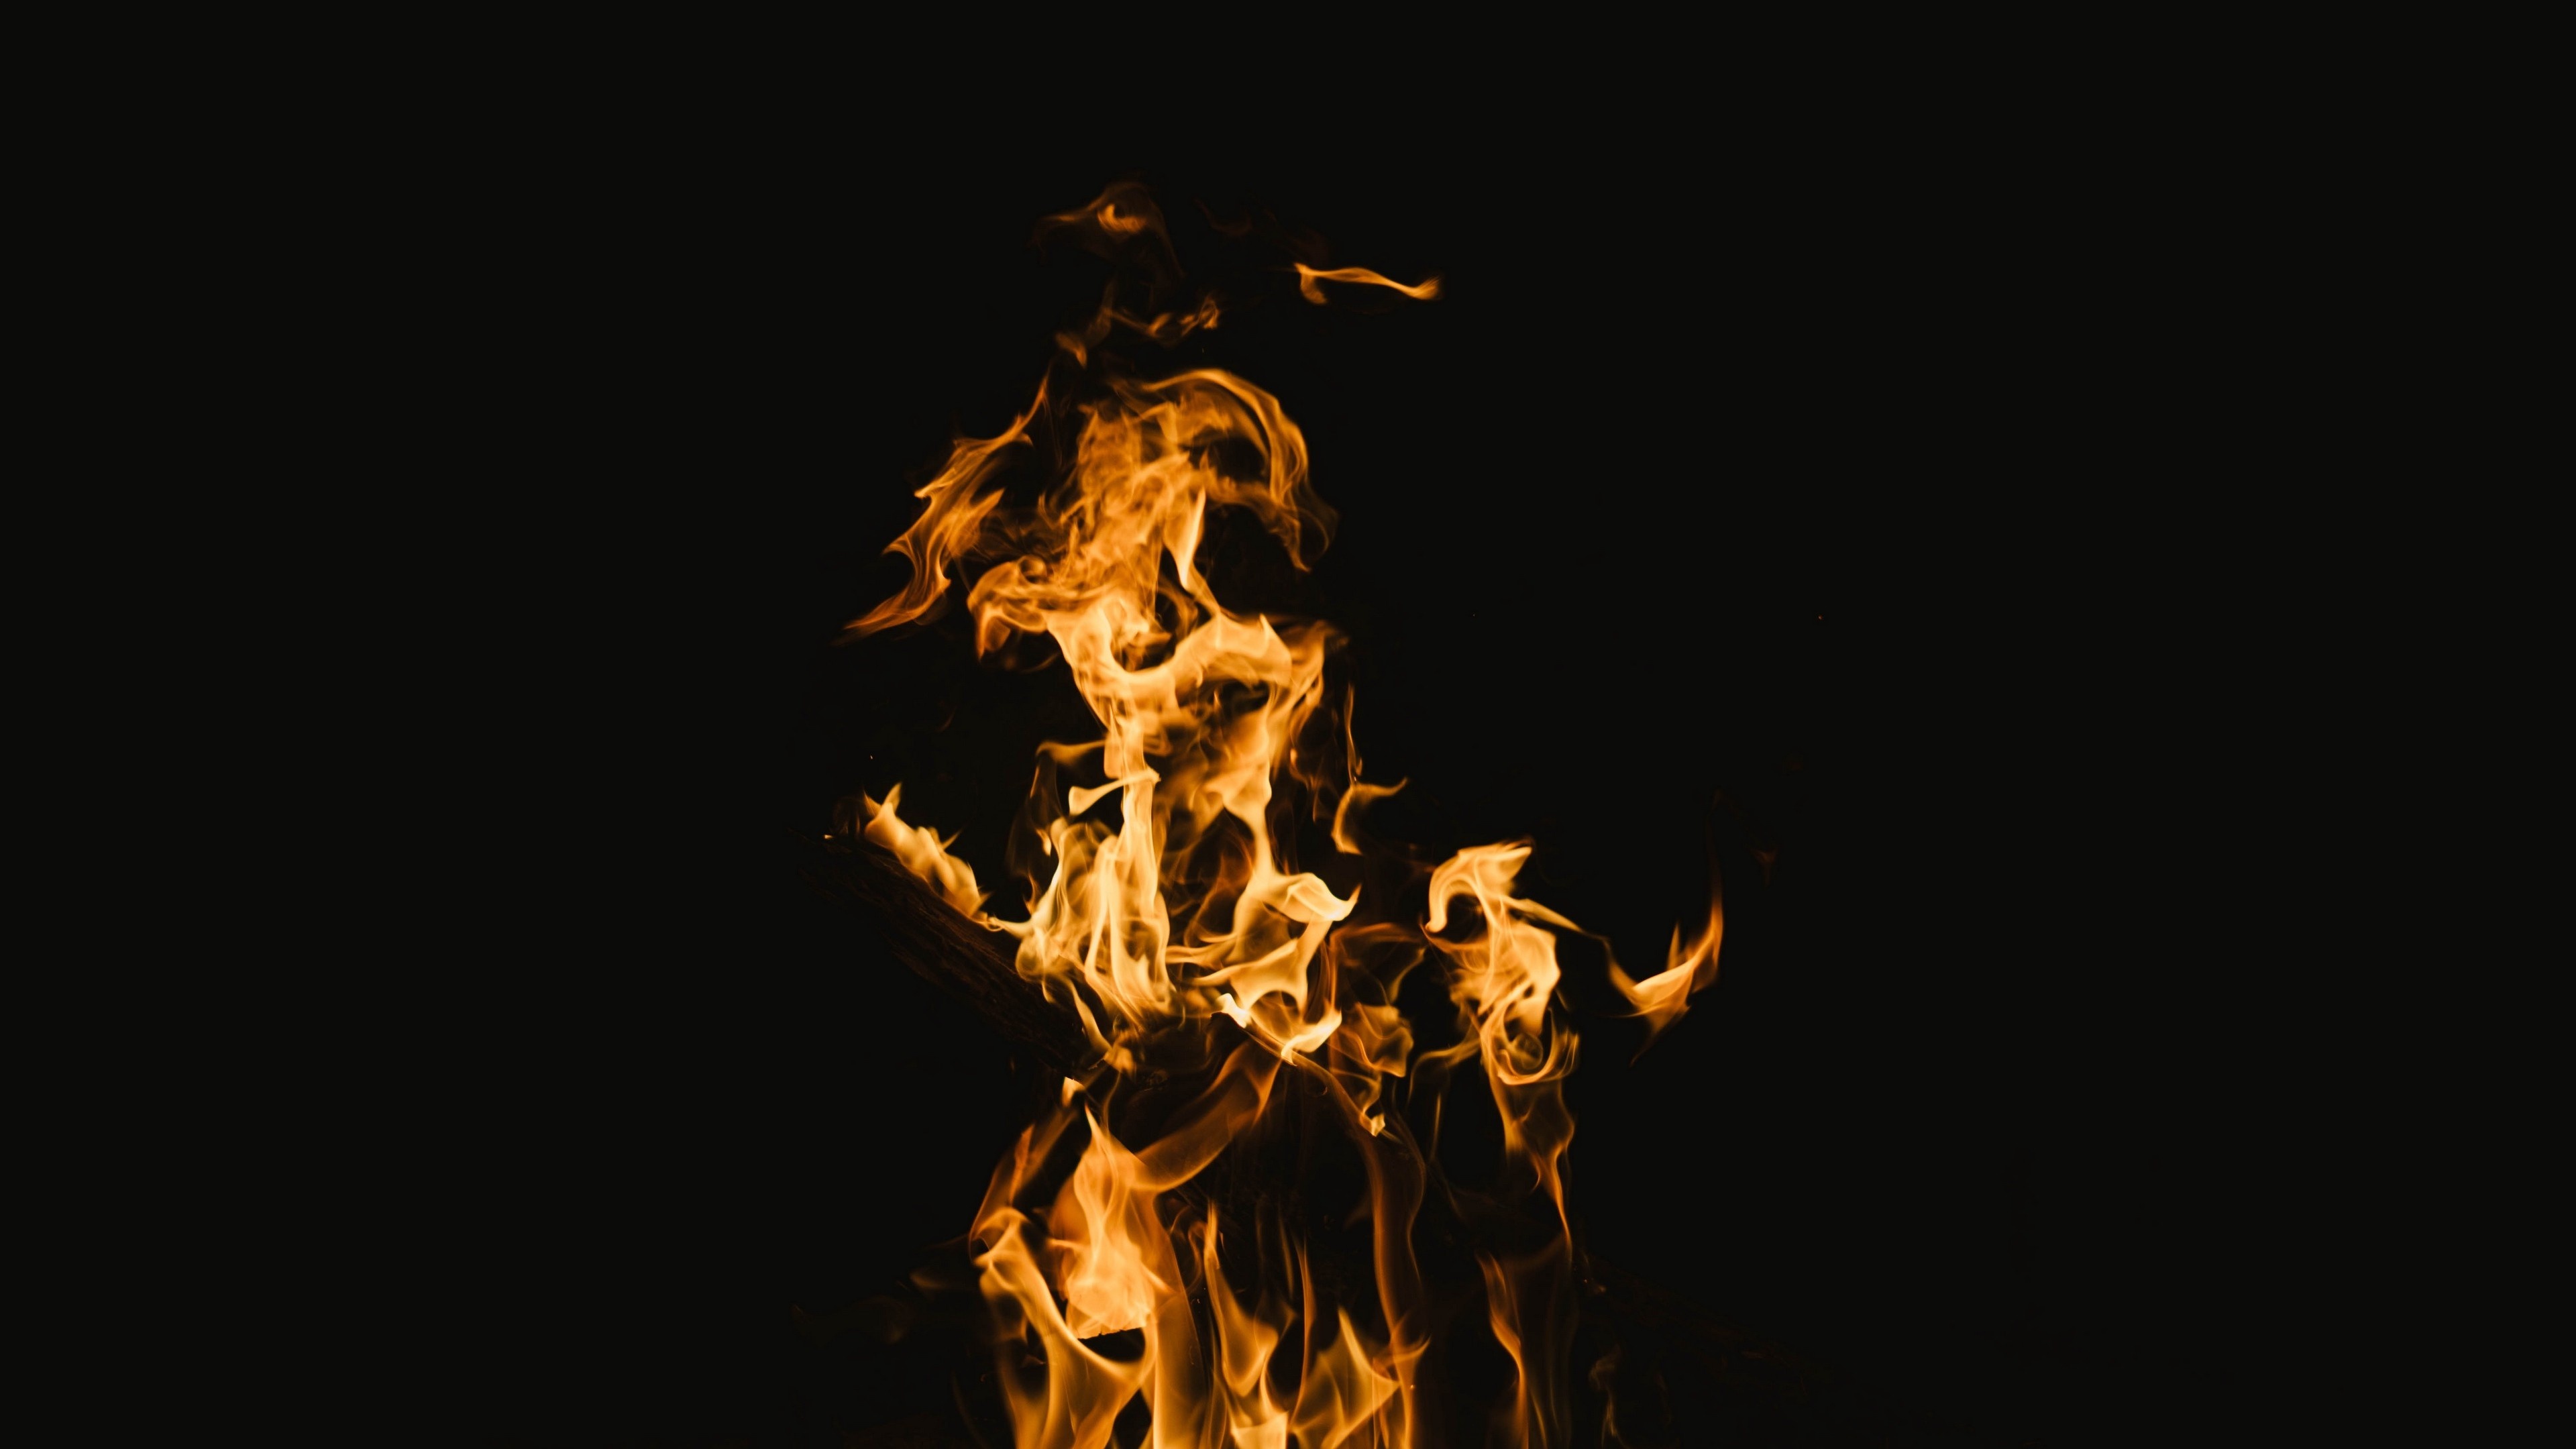 Captivating fire imagery, Flame burn wallpaper, Premium fire visuals, High-definition flames, Striking fire scenes, 3840x2160 4K Desktop